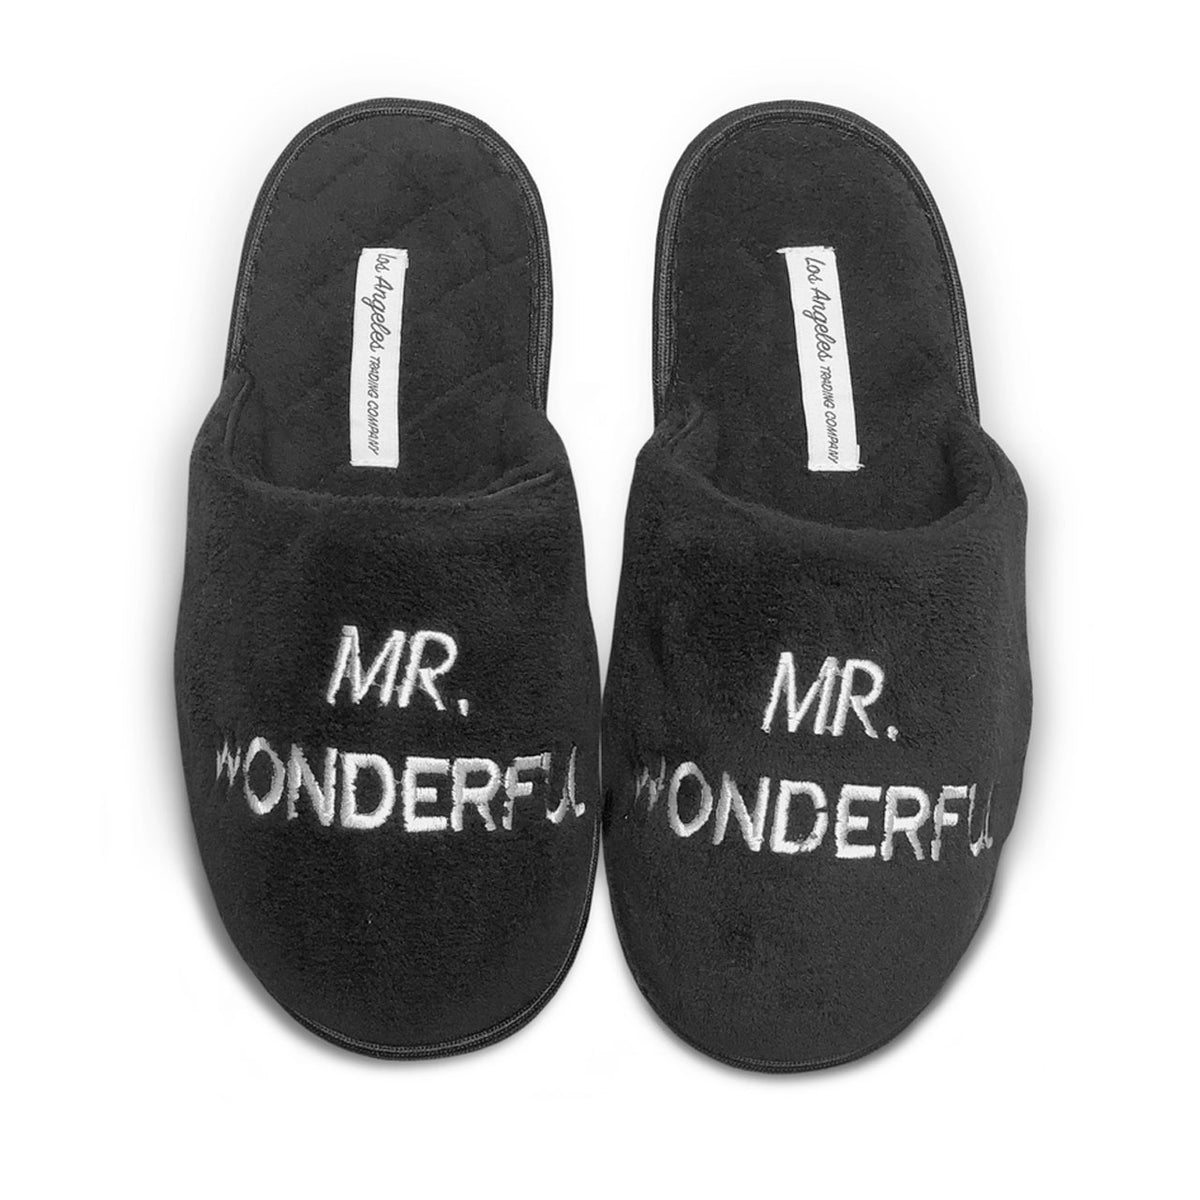 Mr. Wonderful Slippers - RSVP Style